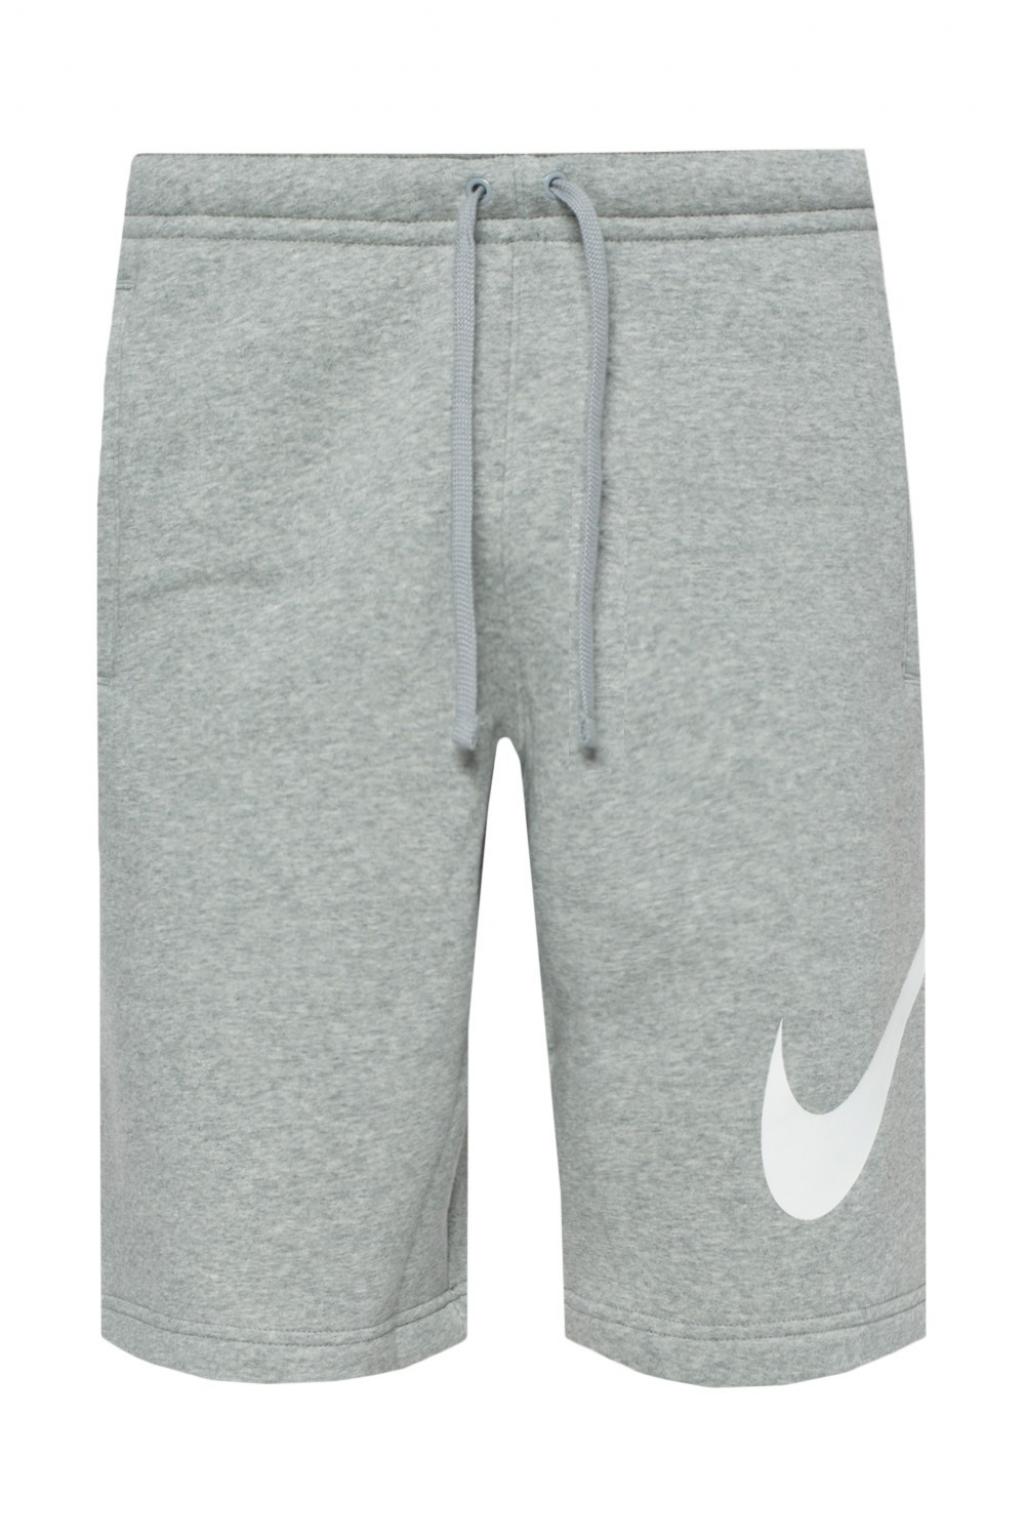 Sweat shorts Nike - Vitkac Italy